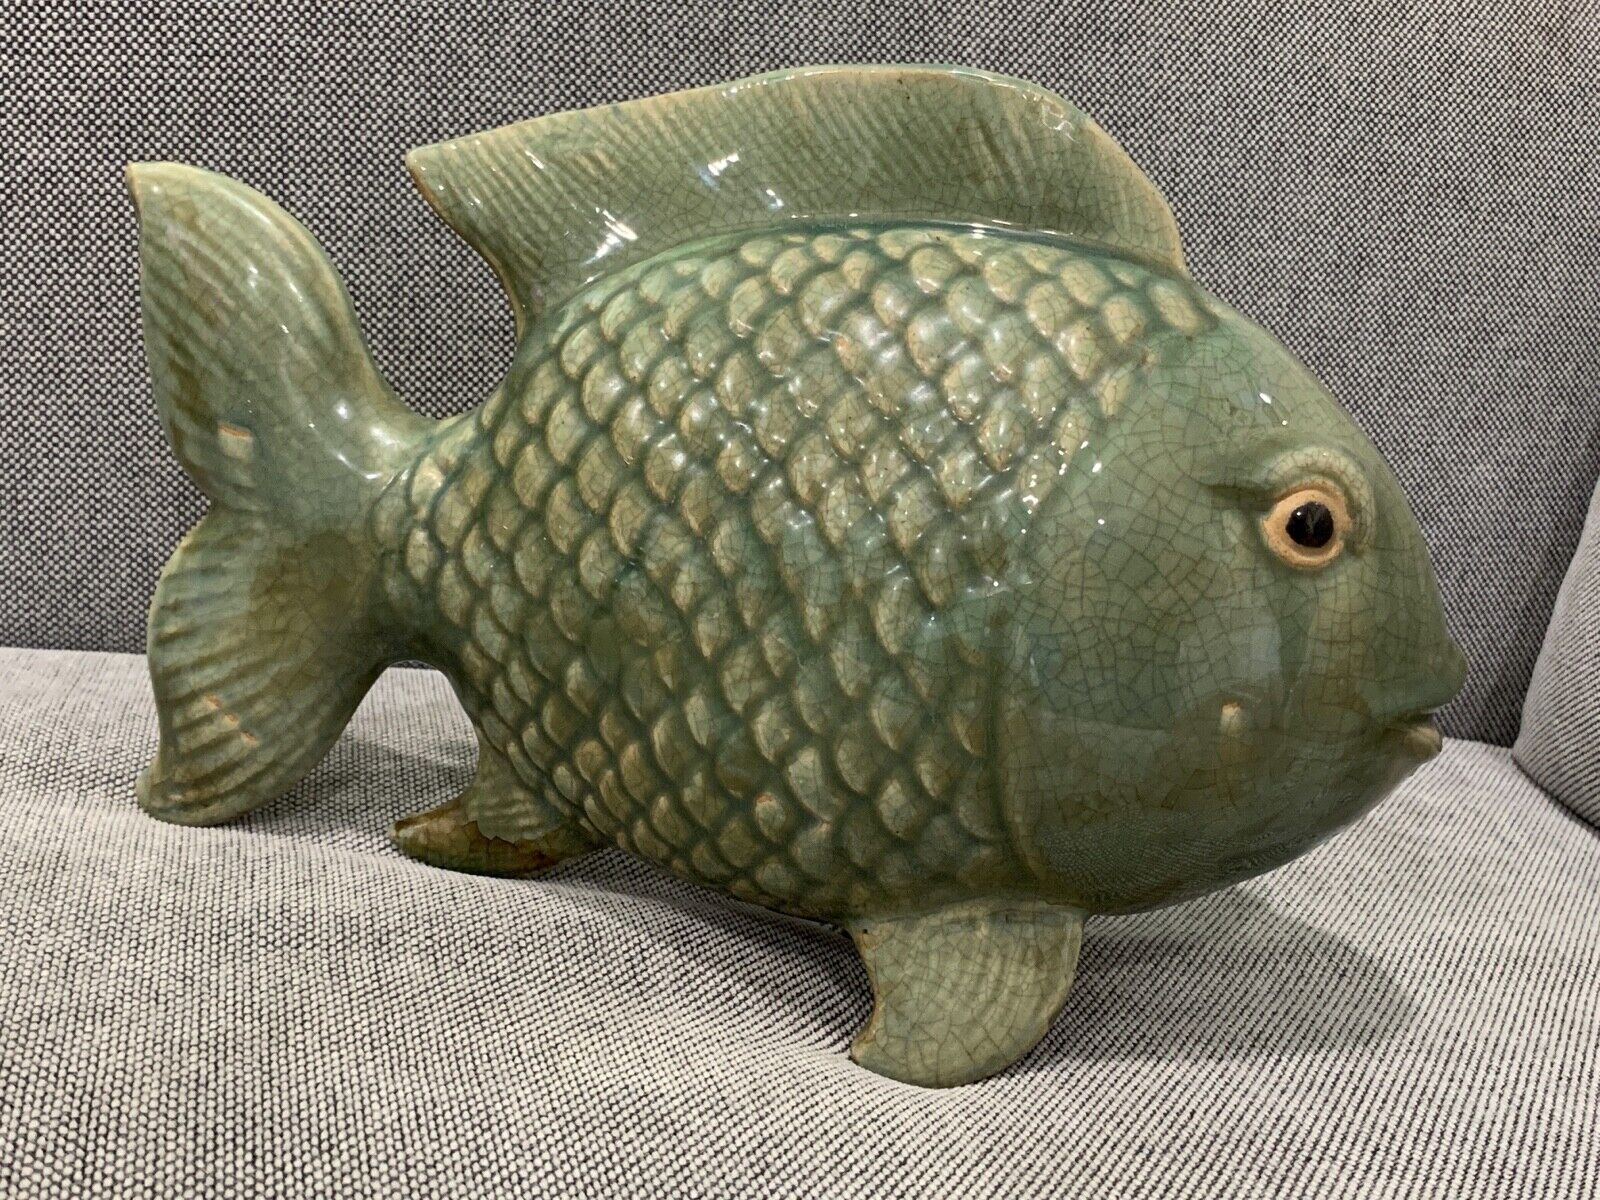 Possibly Vintage Japanese Ceramic Large Koi / Carp Fish Statue Figurine